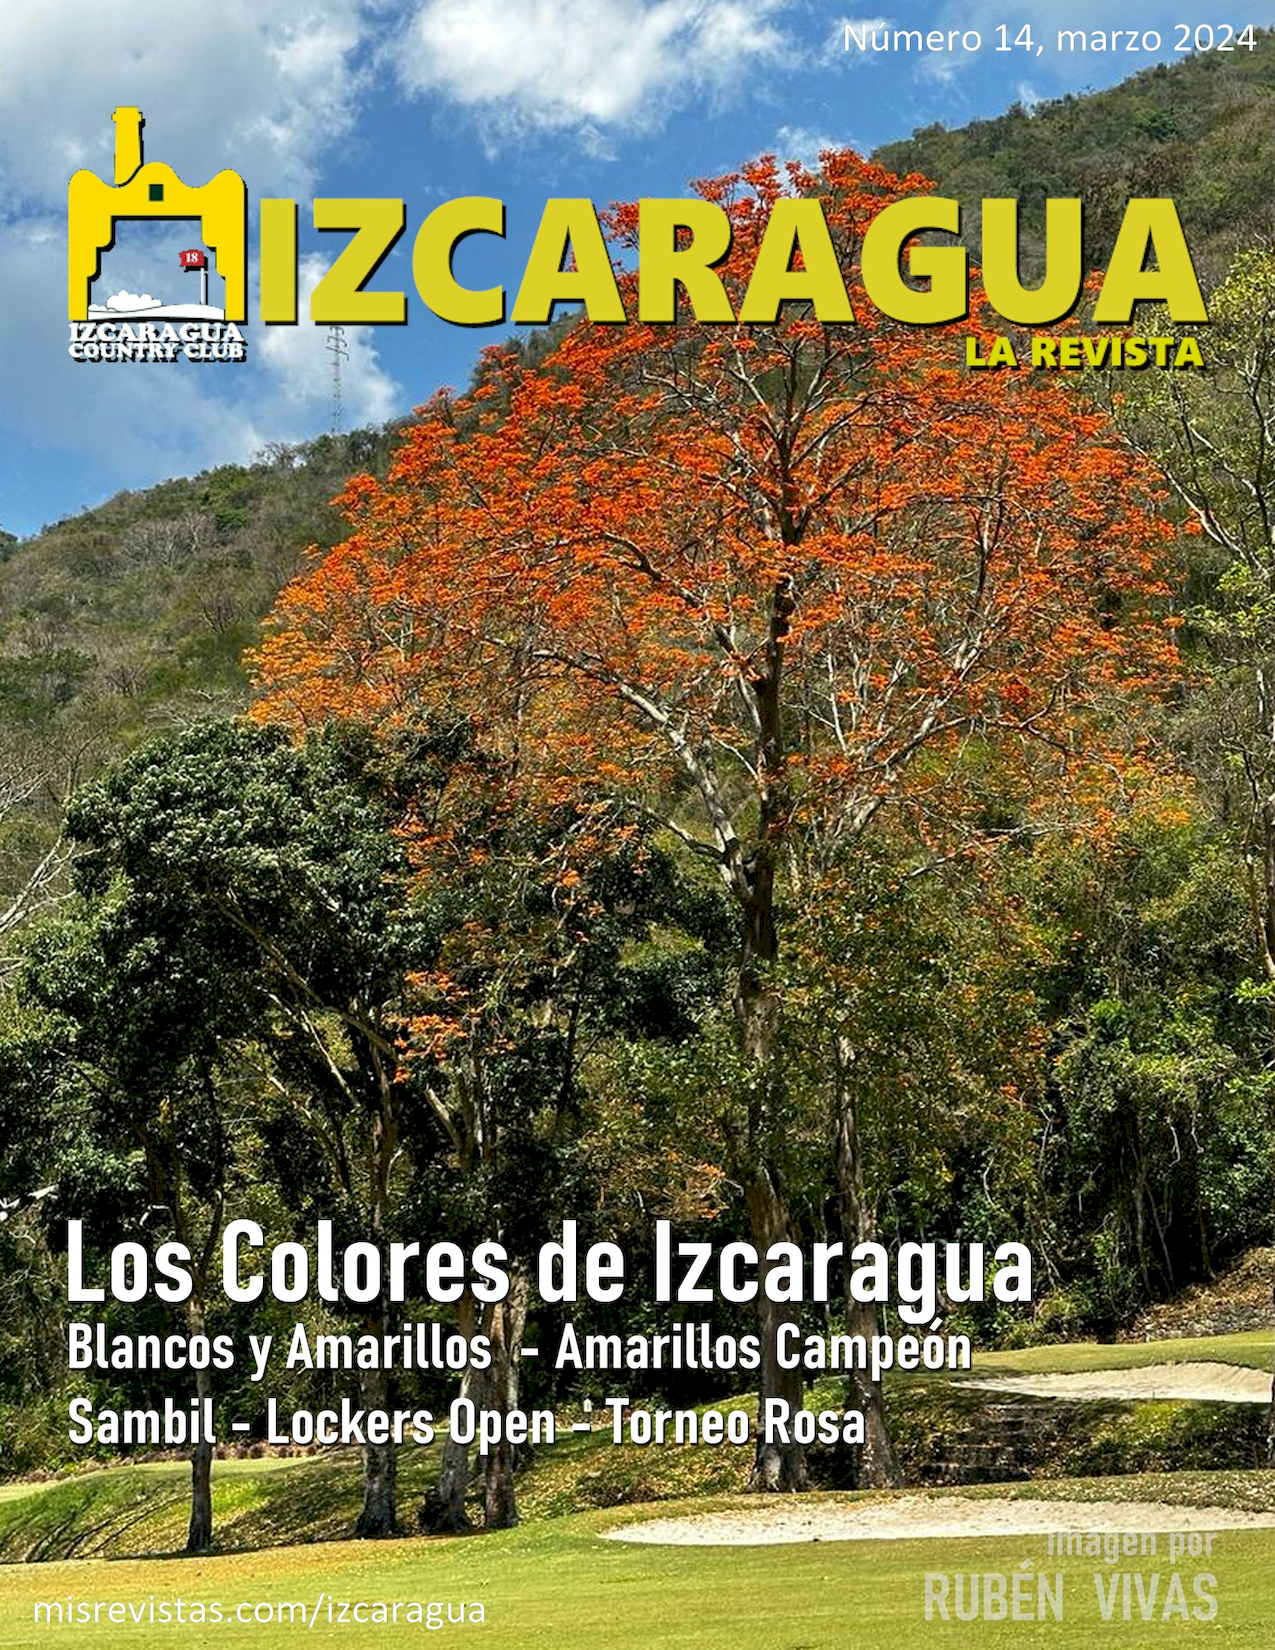 IZC Izcaragua Country Club Revista 14 - Marzo 2024